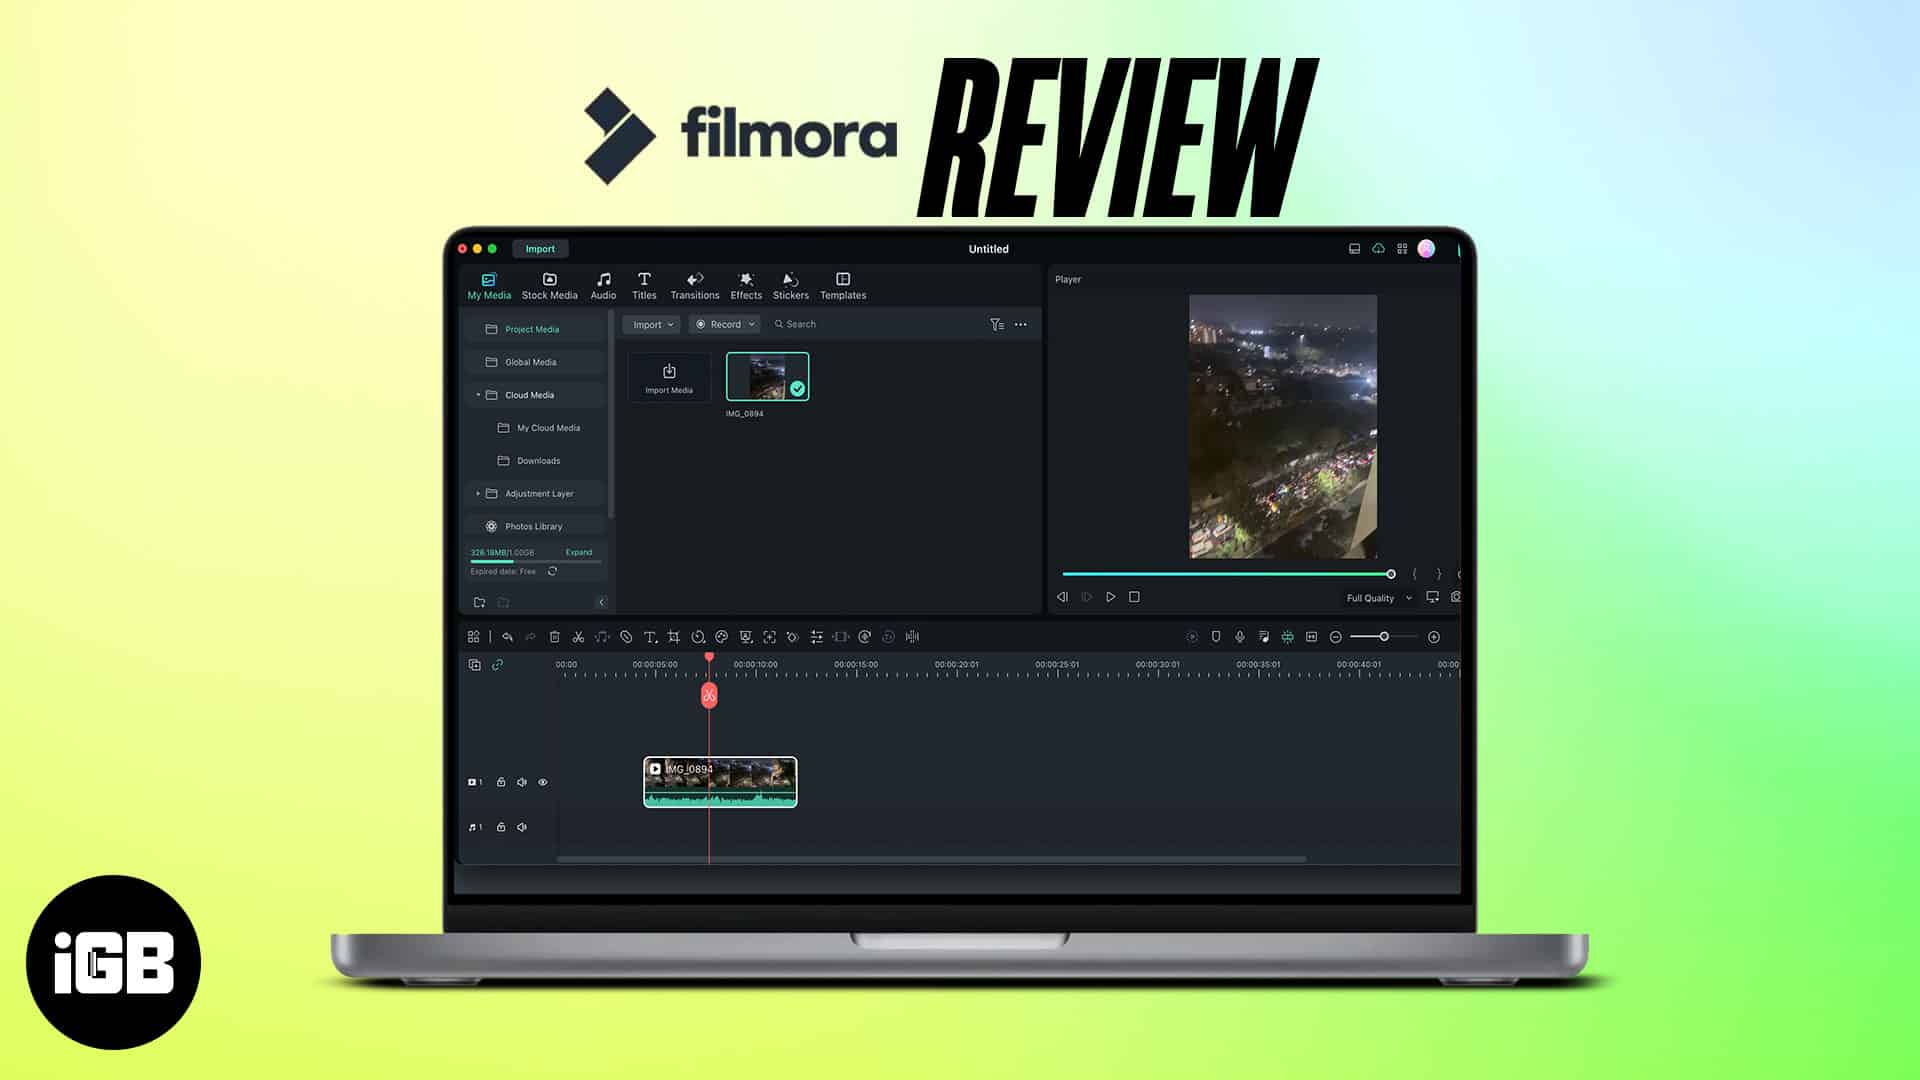 Detailed review of filmora 12